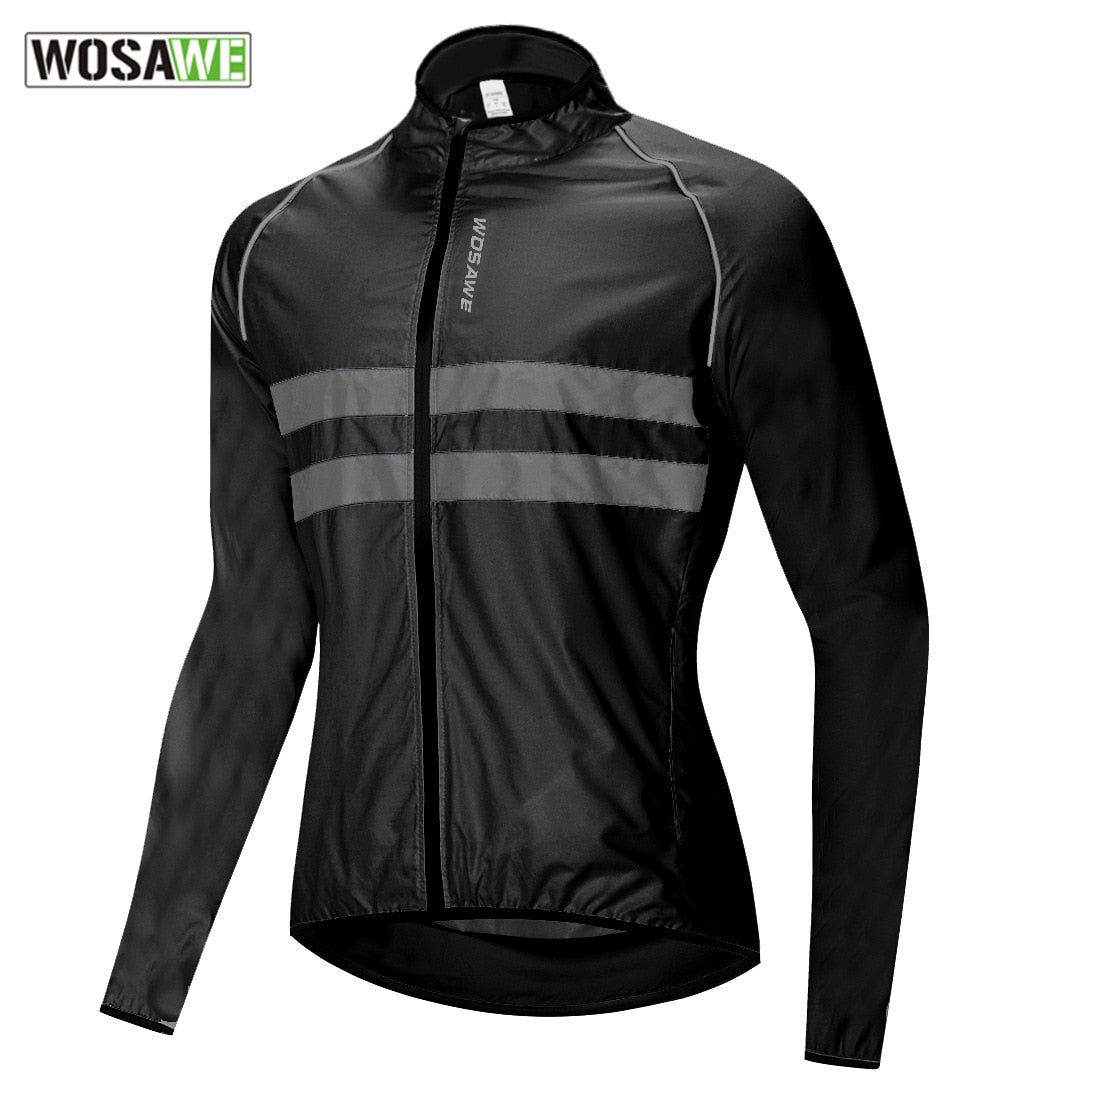 WOSAWE Ultralight Reflective Men's Cycling Jacket - Waterproof/Windproof, Black/Orange/Yellow - Vlad's Bike Bits